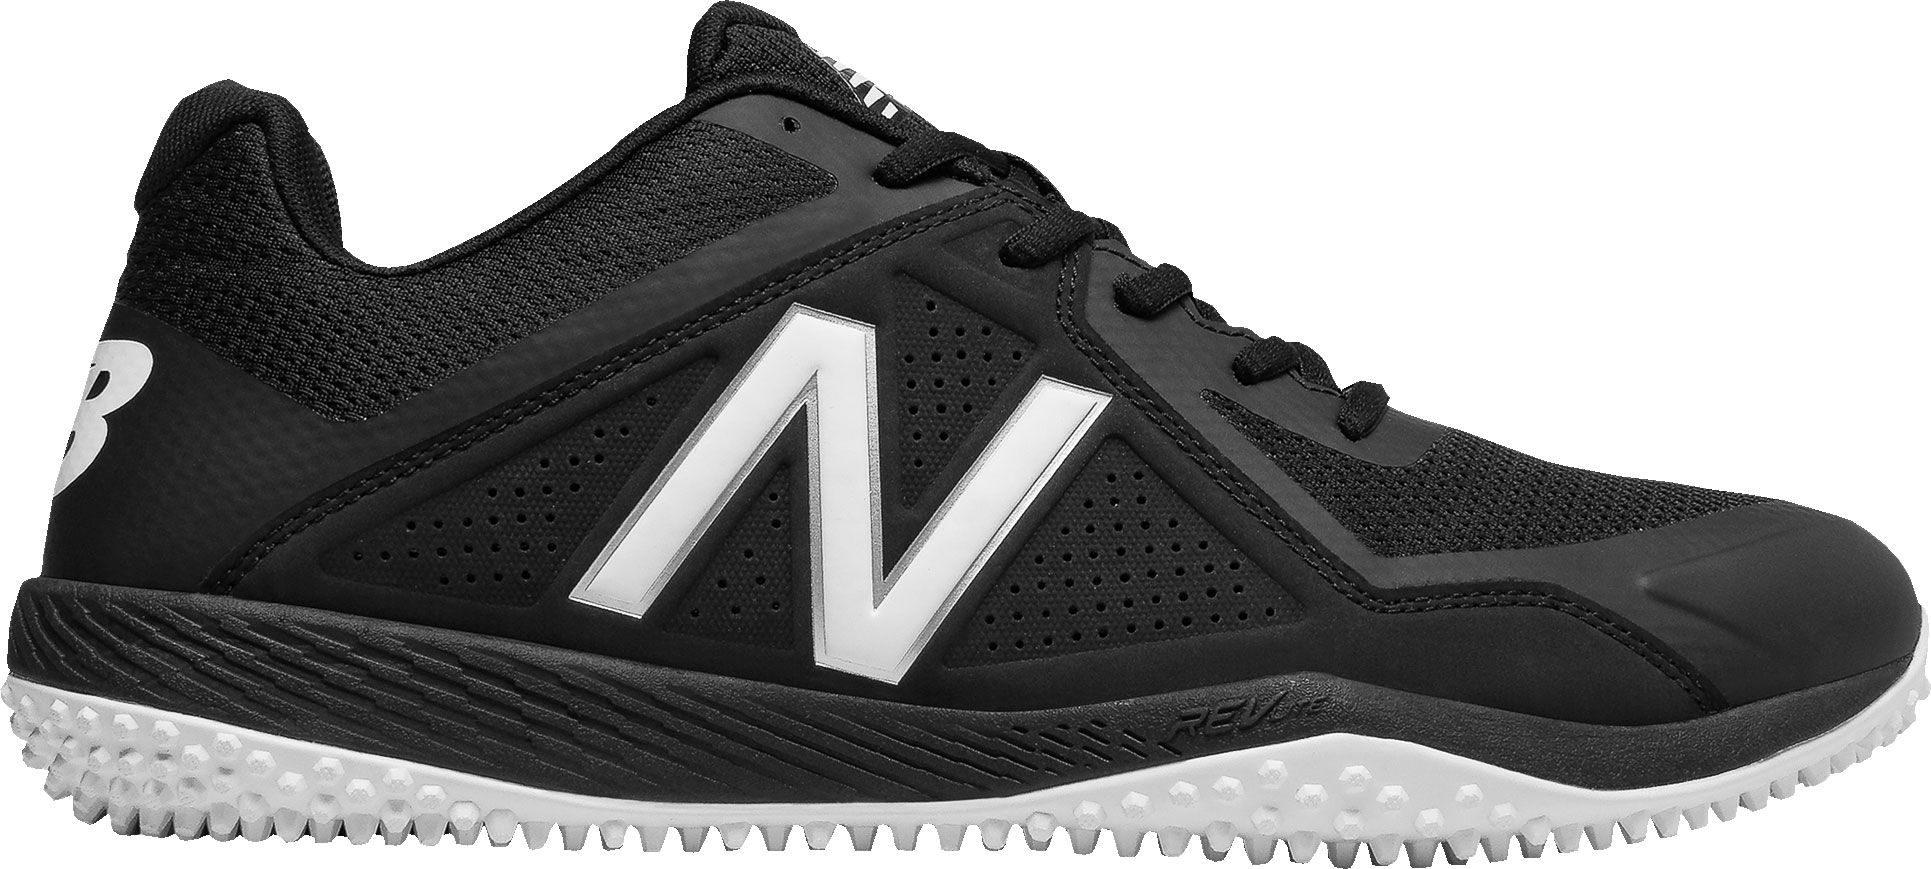 new balance baseball turf shoes youth